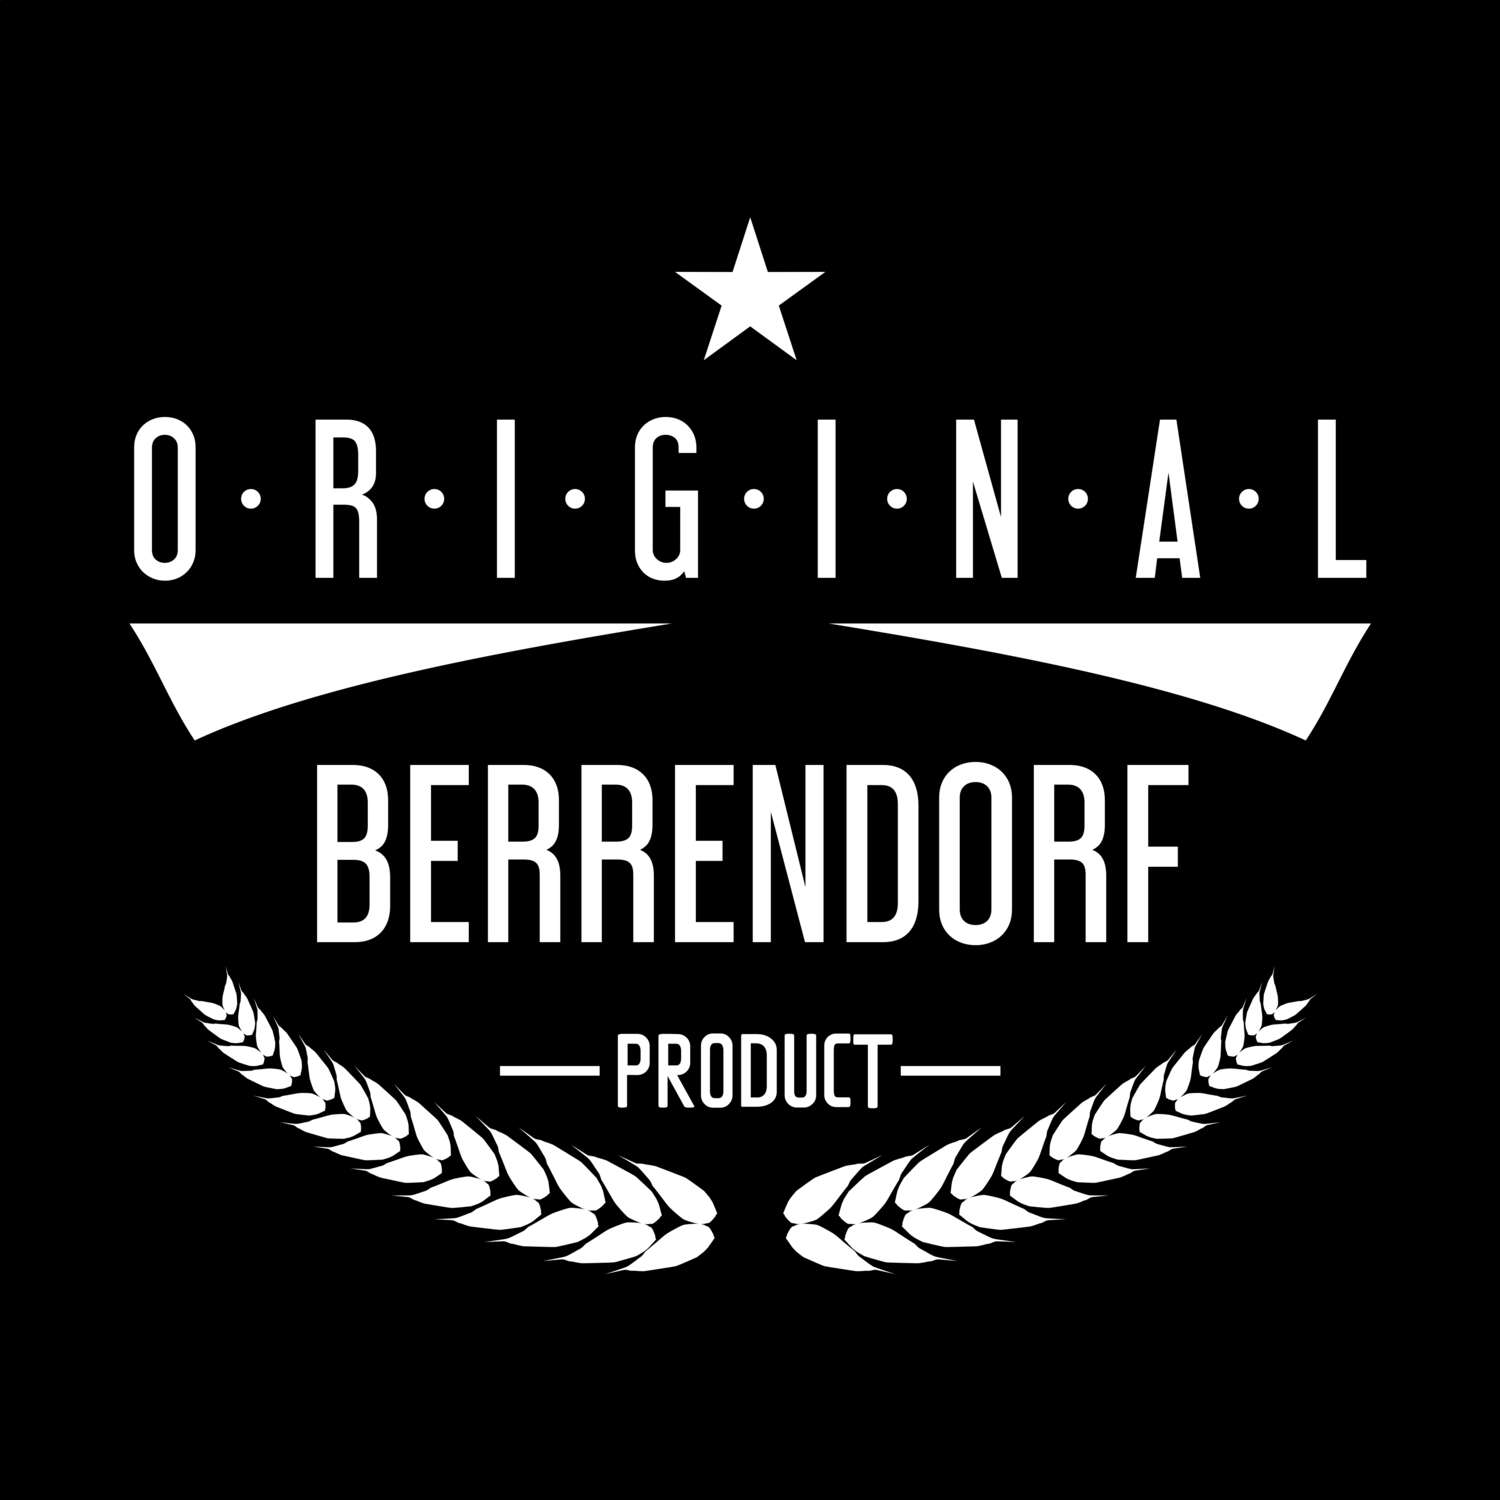 Berrendorf T-Shirt »Original Product«